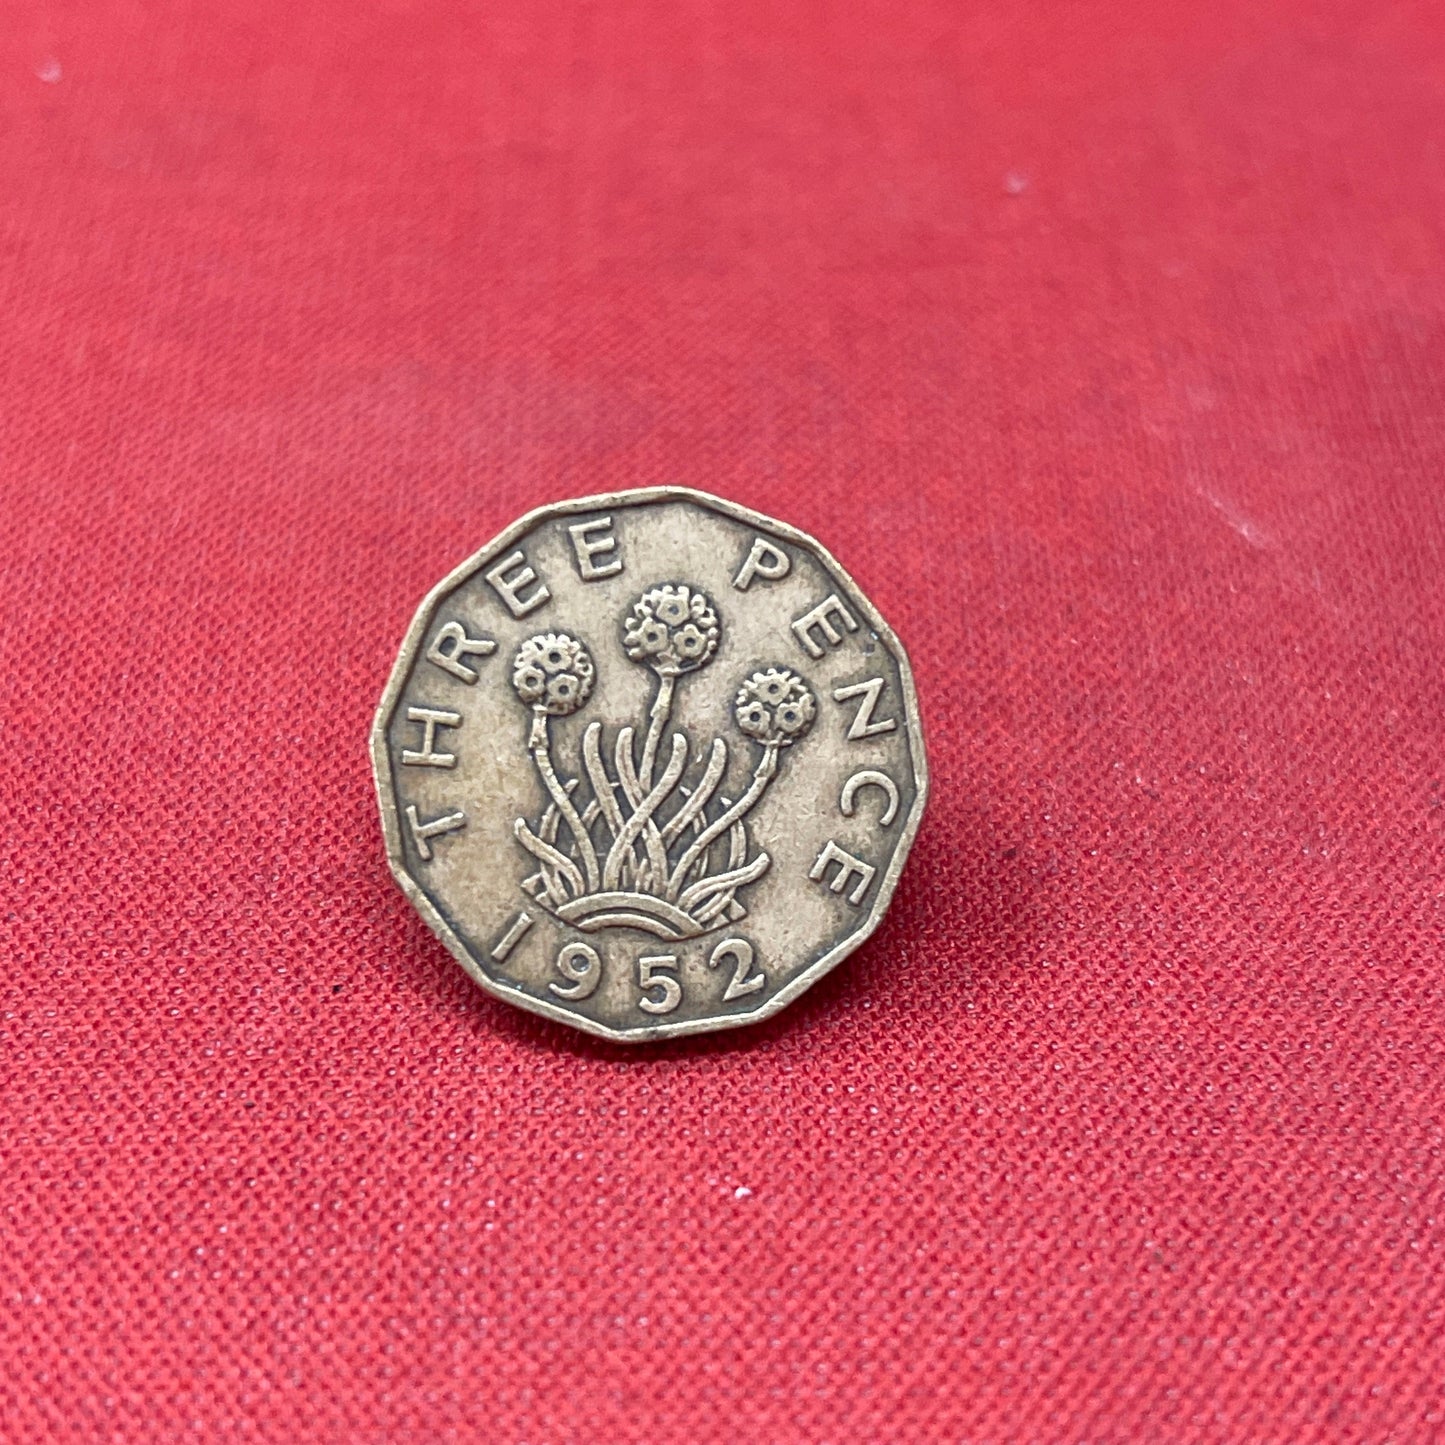 King George VI 1952 Threepence Coin